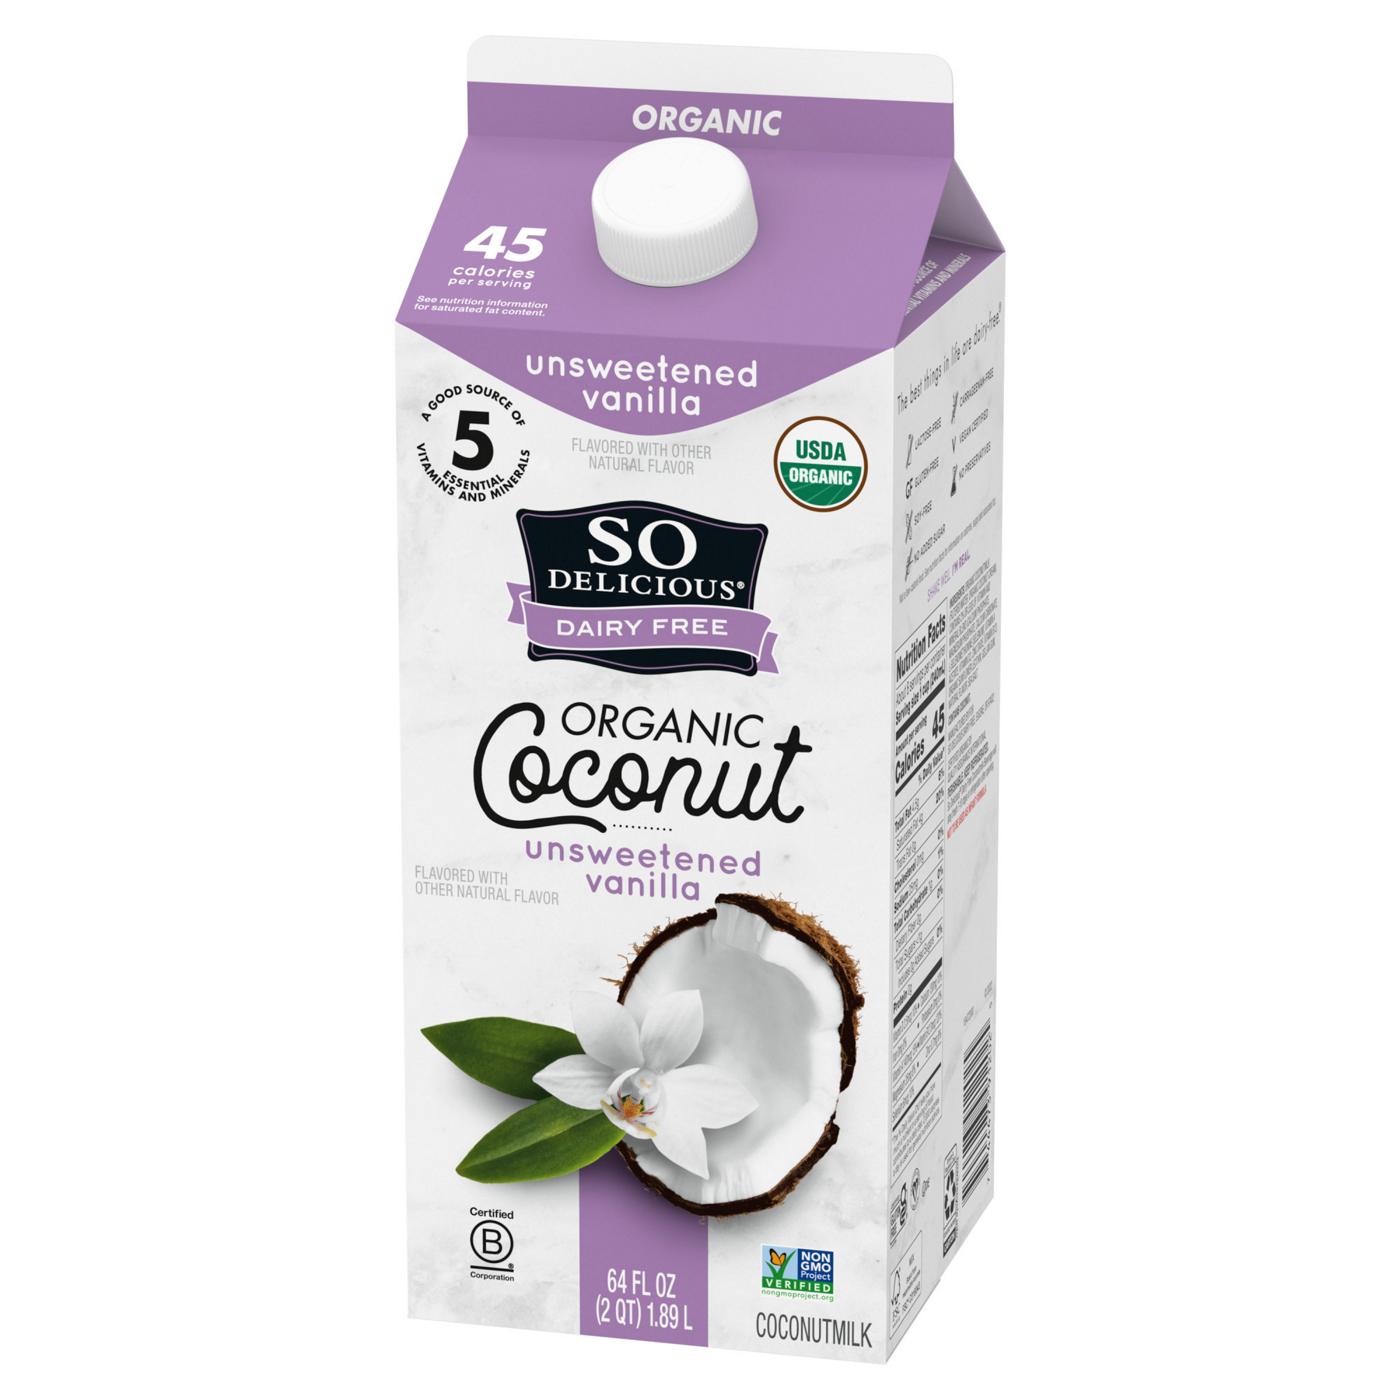 So Delicious Dairy Free Uht Unsweetened Vanilla Coconut Milk; image 8 of 8